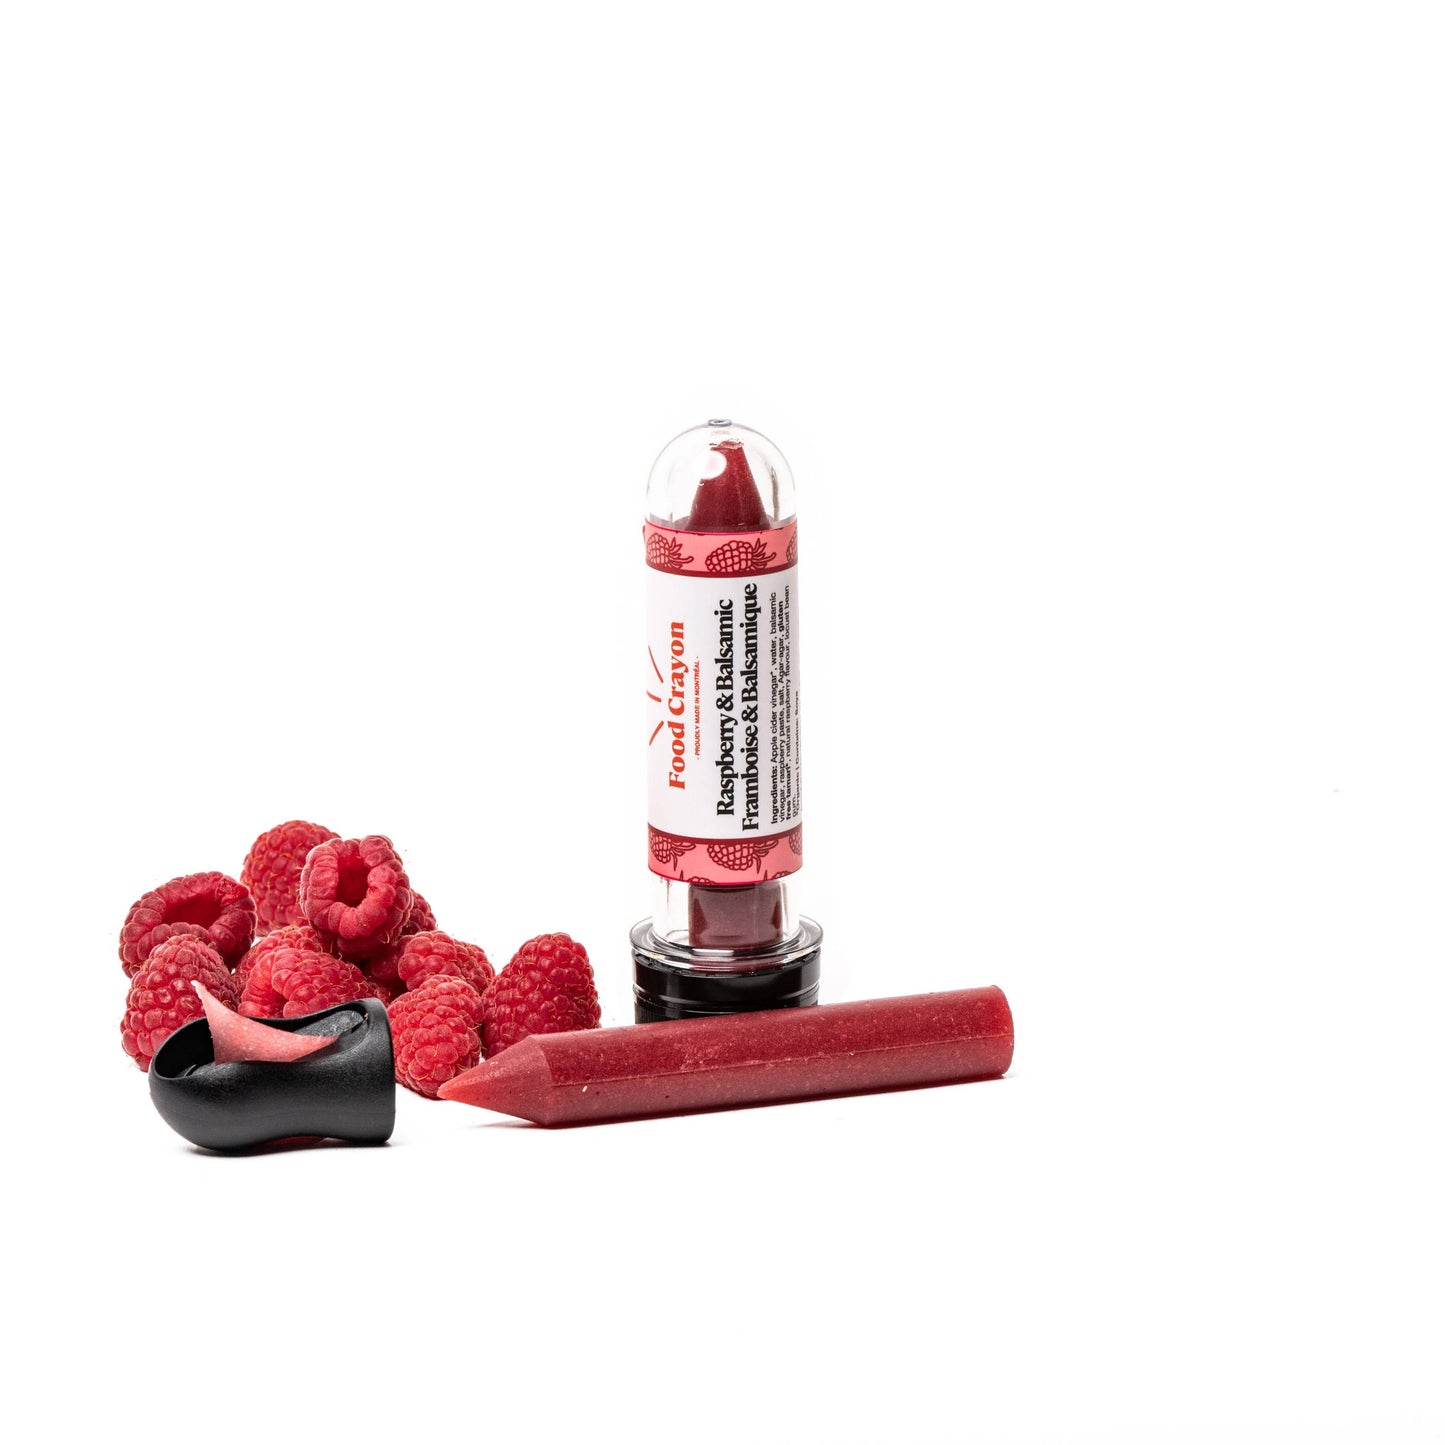 Food Crayon - Raspberry Balsamic- Single Box (1 Food Crayon + 1 Sharpener)